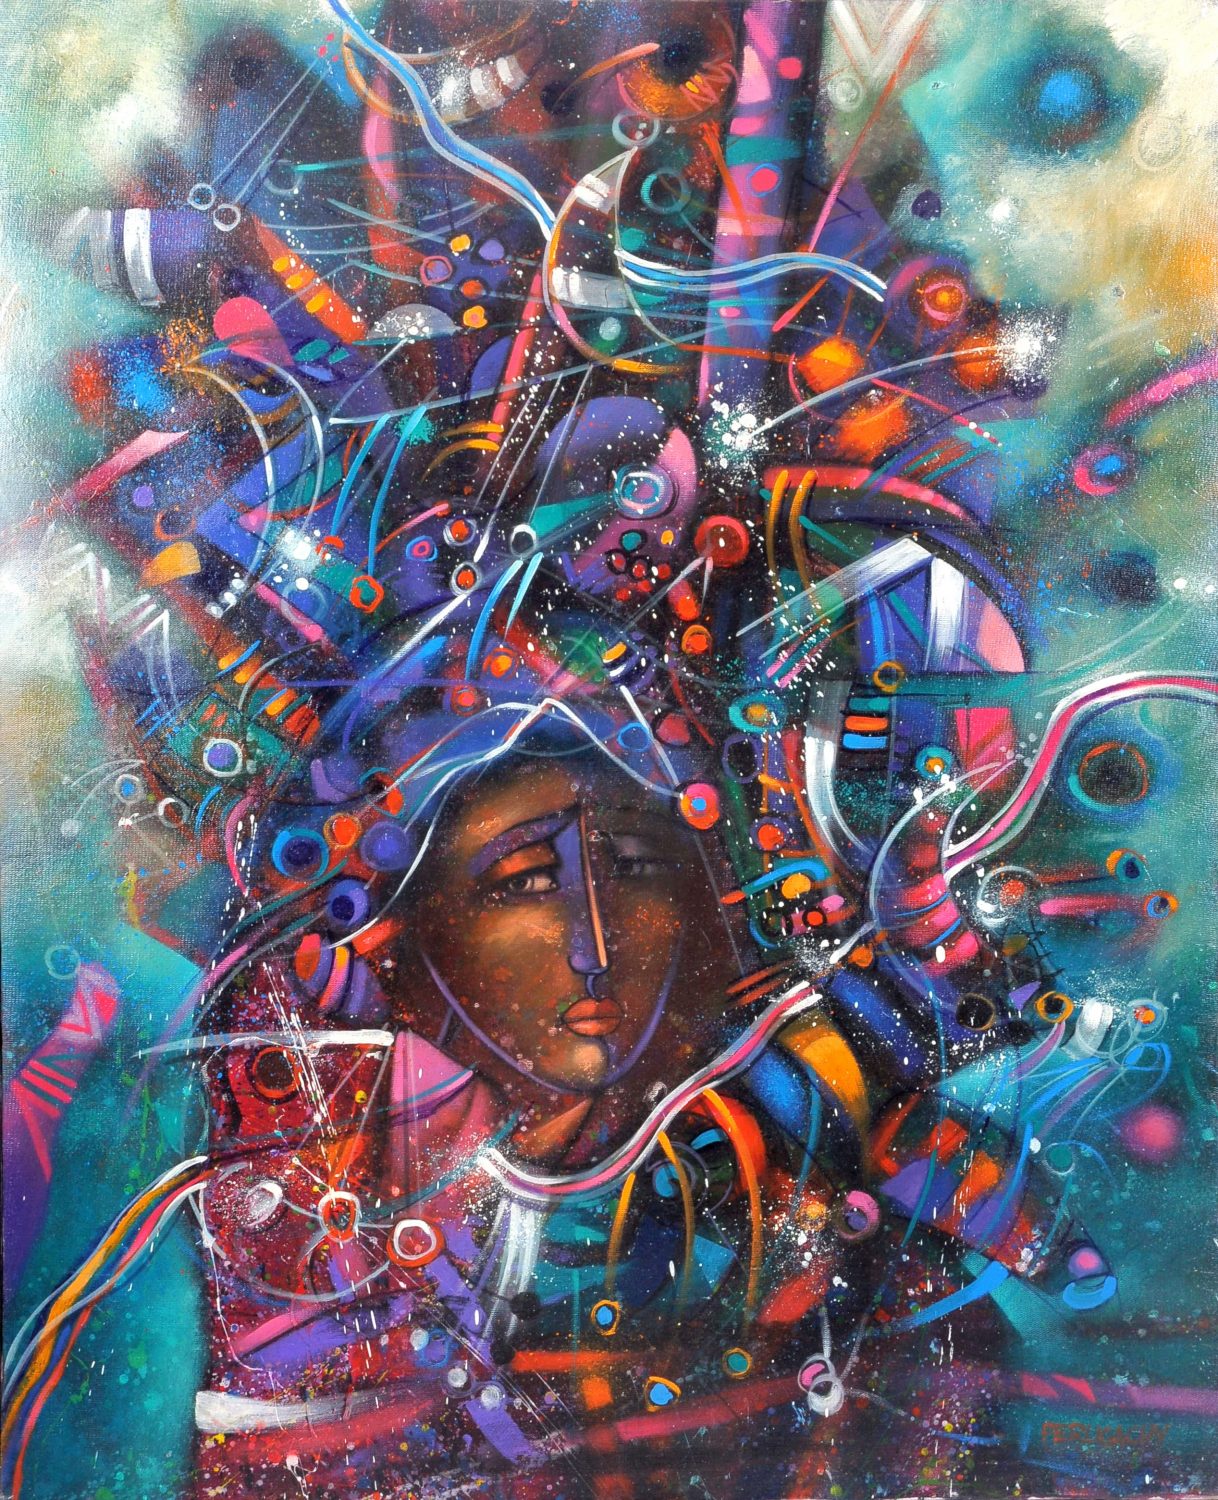 thumbnail of Andean Woman Series by Ecuadorian artist Jorge Perugachi. medium: acrylic on canvas. Dimensions: 43.3 x 35.4 inches. date: 1989